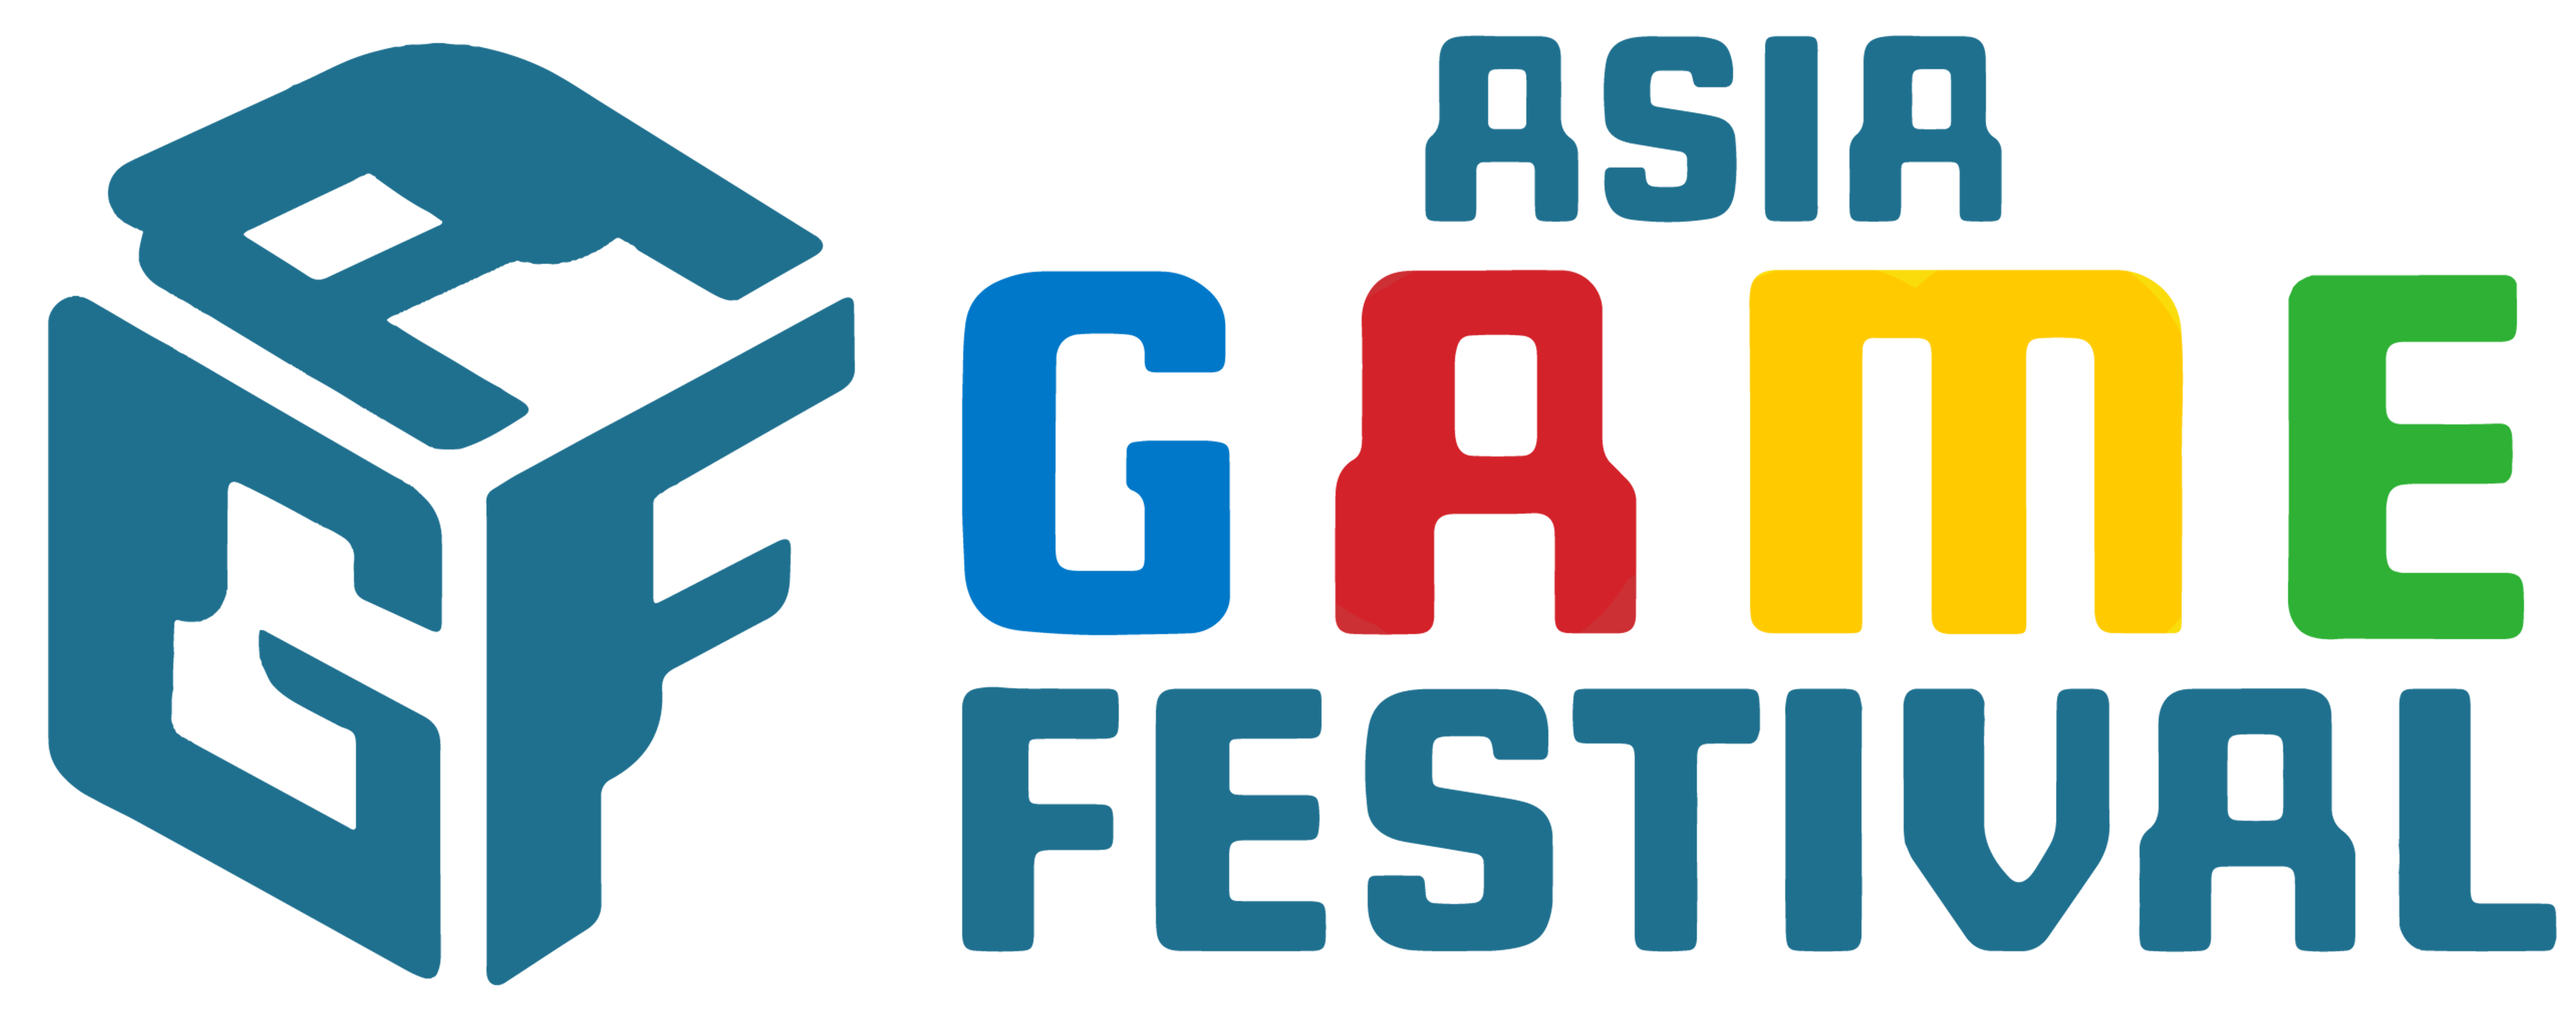 Blue Asia Logo - Home Mobile GAME Festival